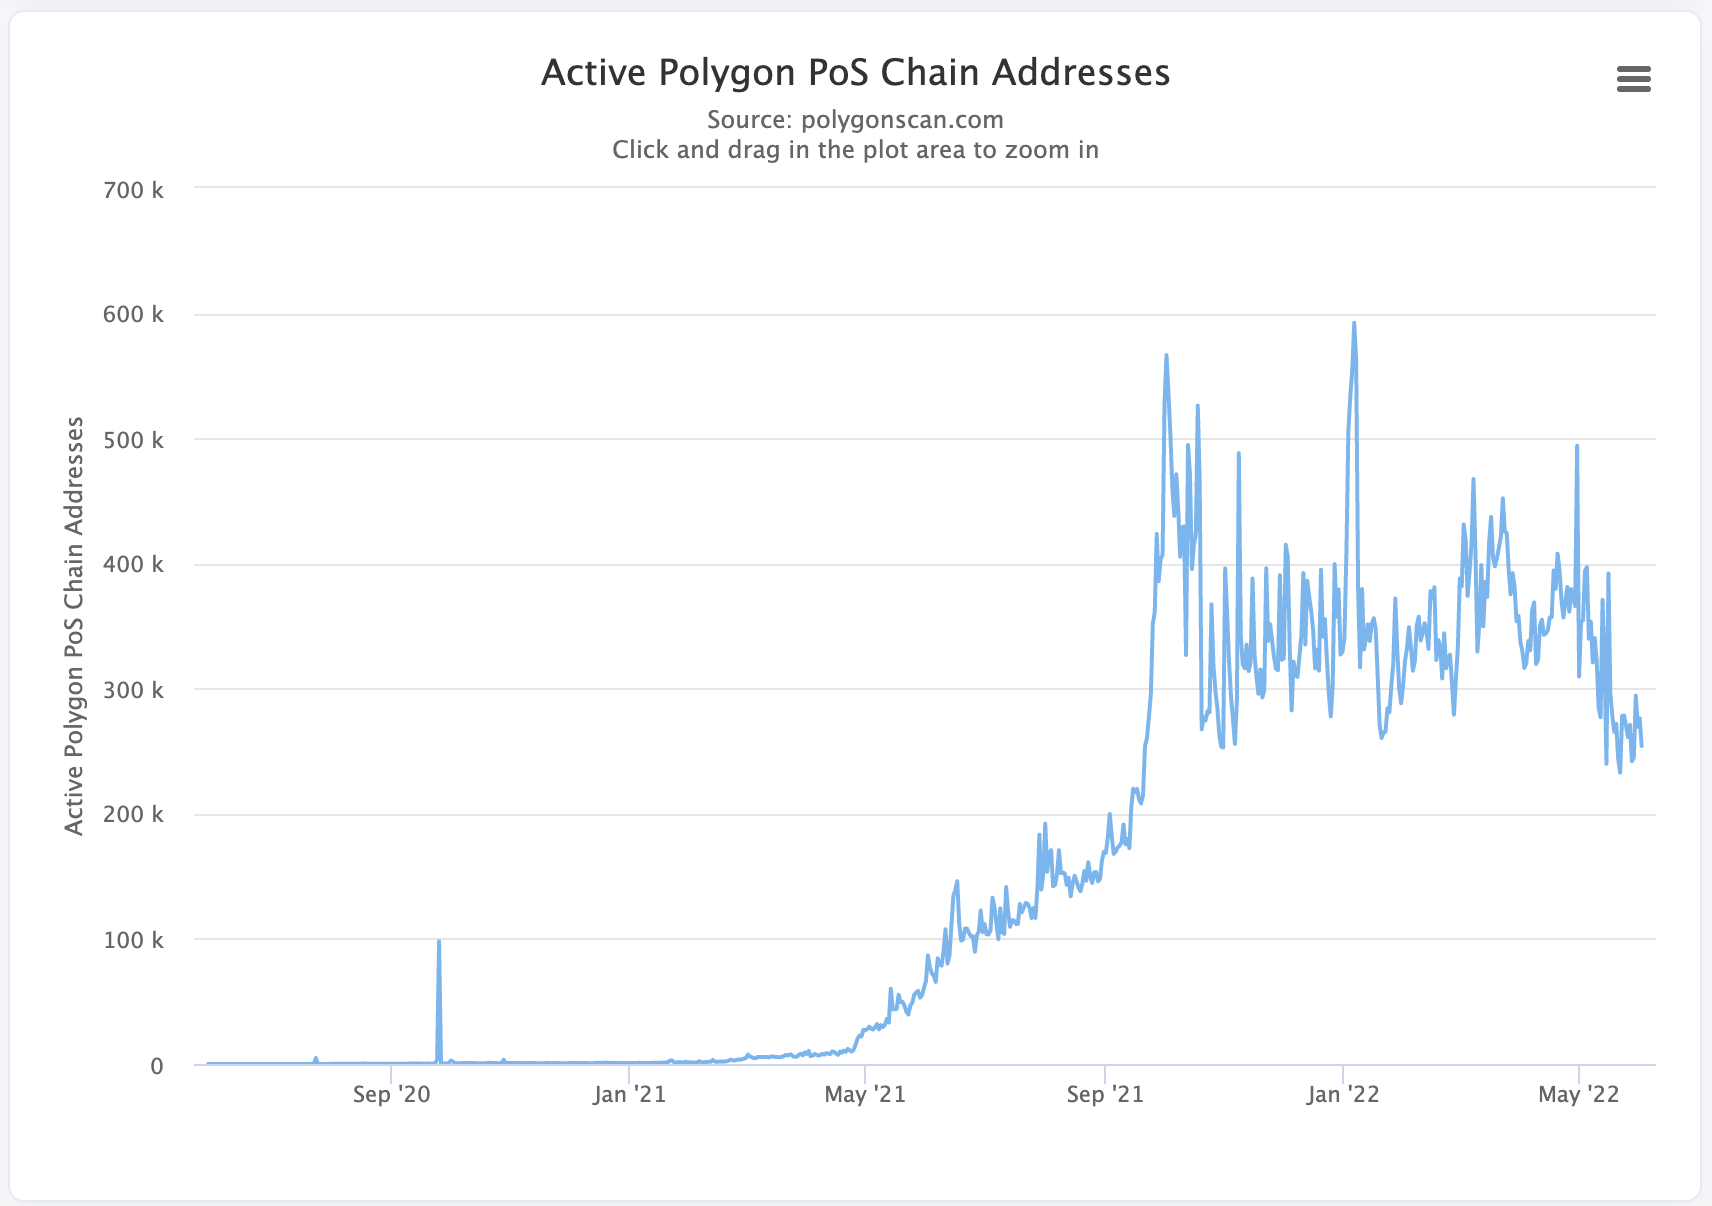 Active addresses on Polygon